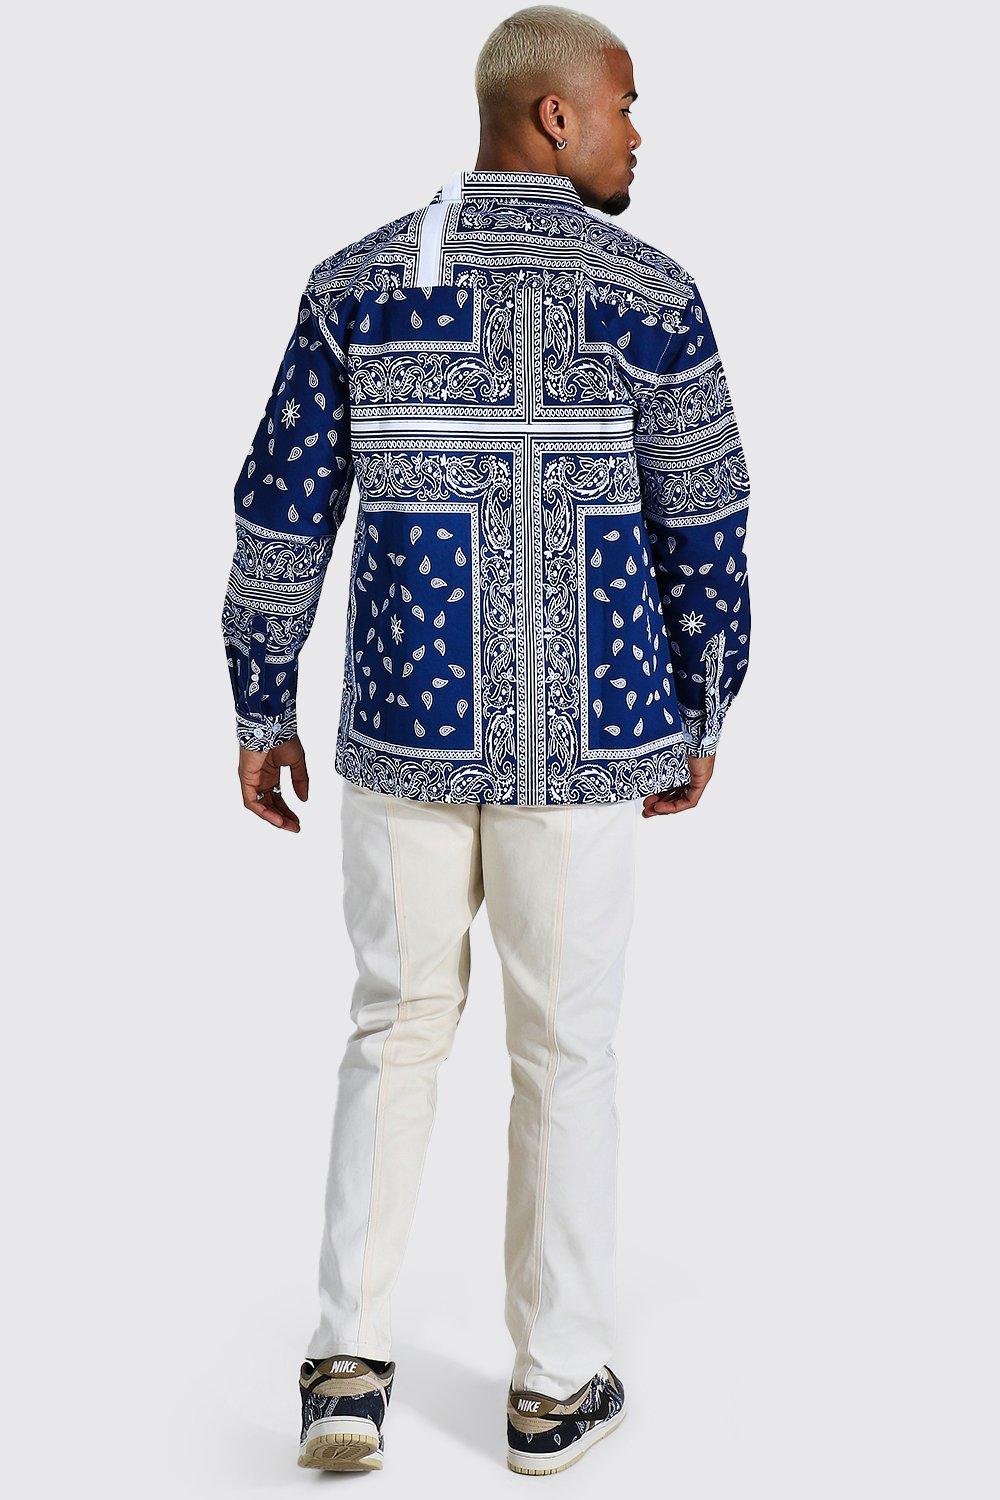 Bandana Print Clothing Men, Men's Casual Jacket